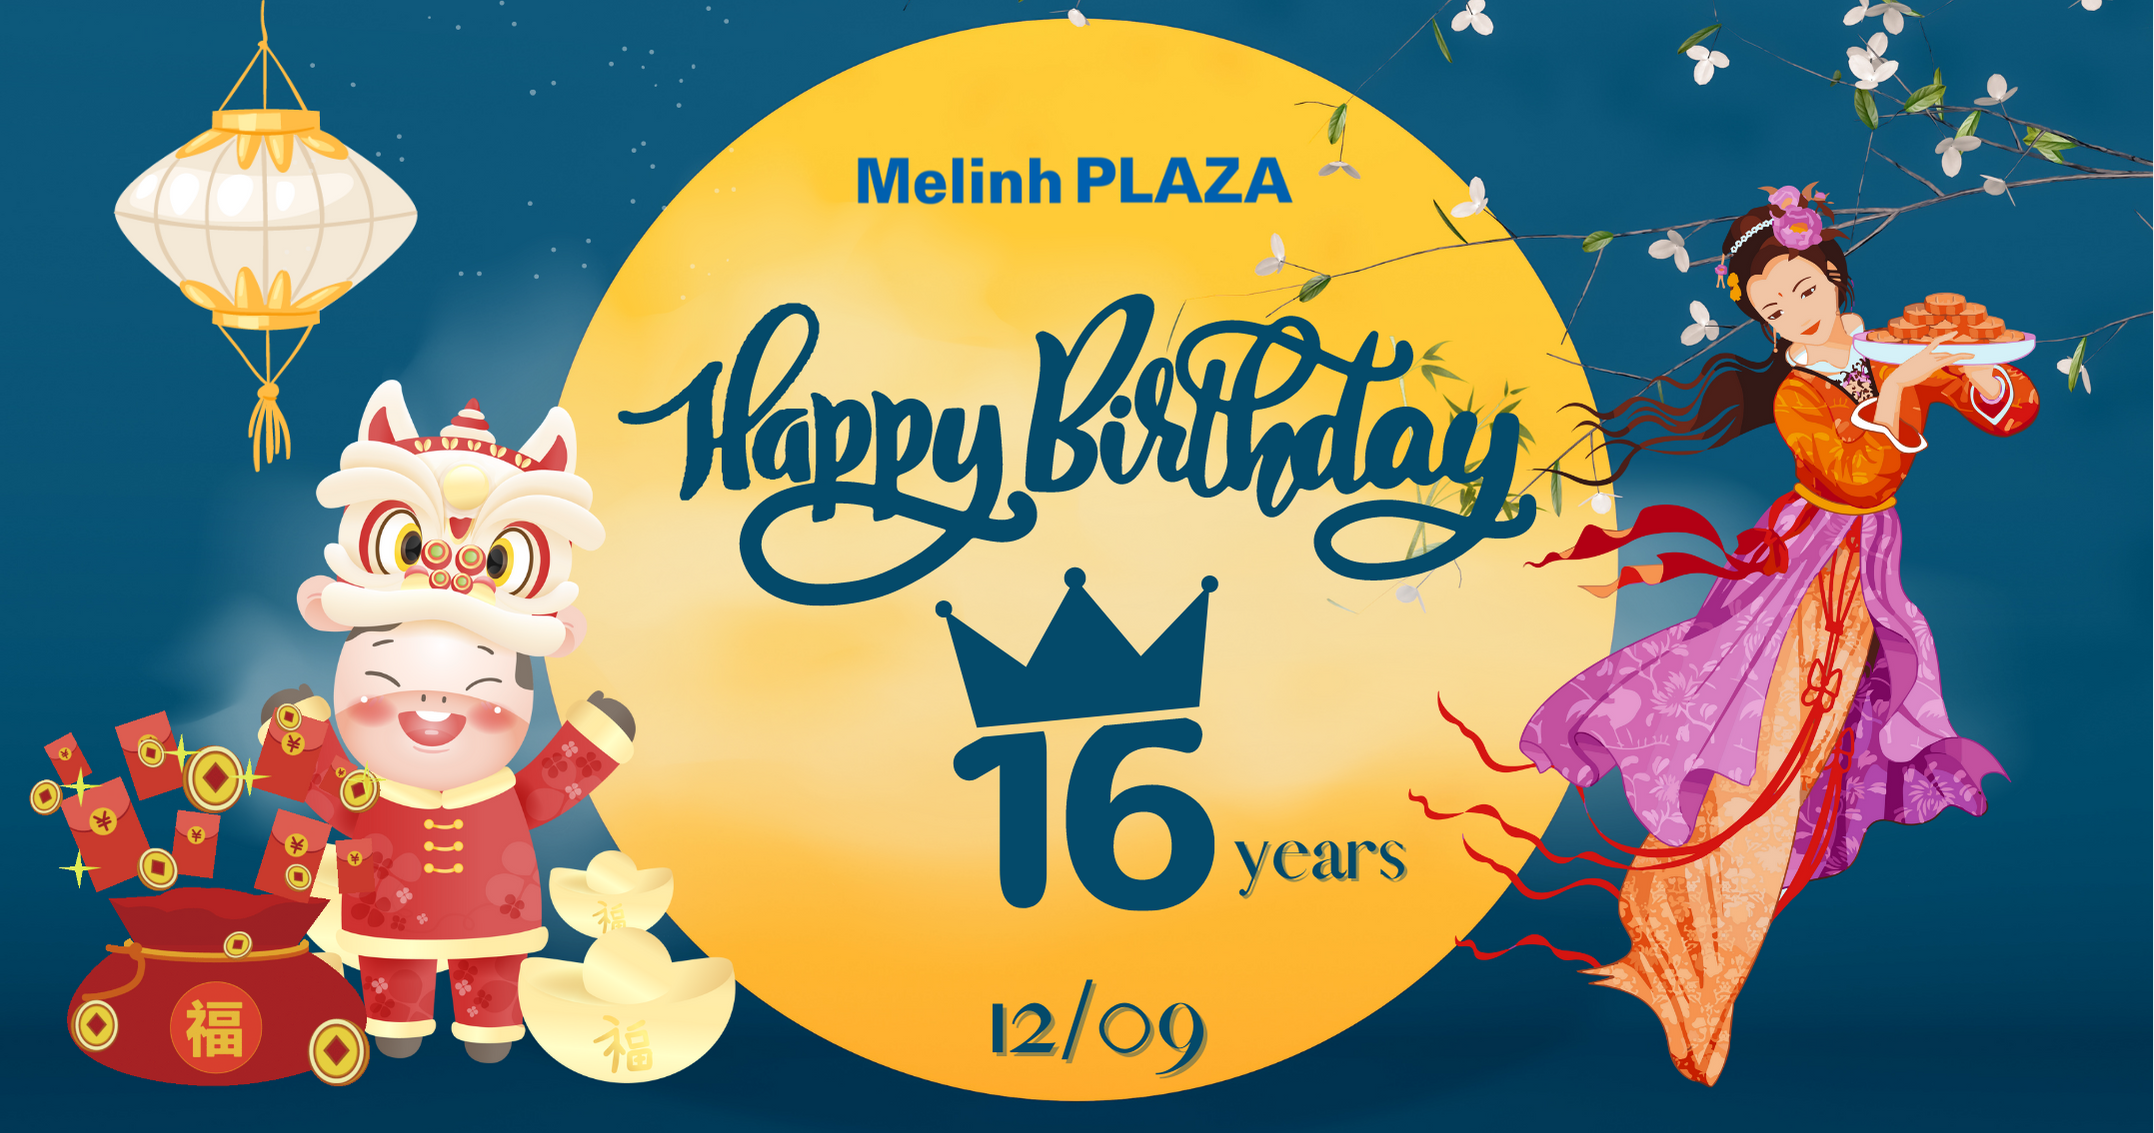 Melinh Plaza - Thêm tuổi mới - Vươn tầm cao mới